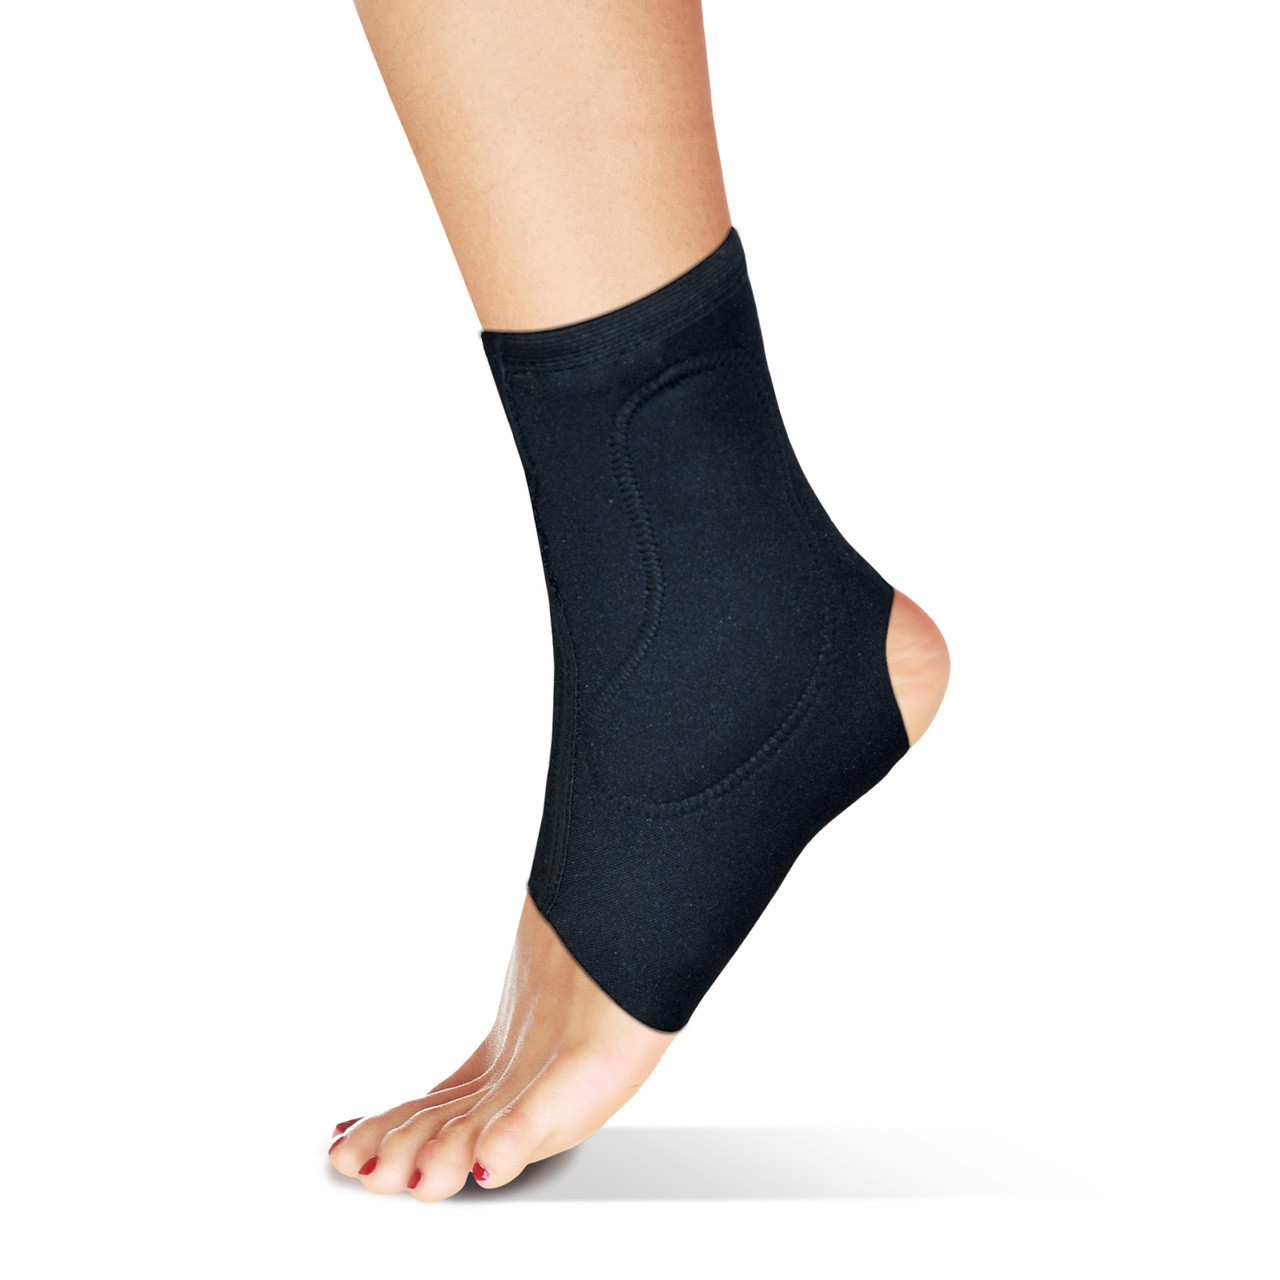 0353 - Thuasne Sport Reinforced Ligament Ankle Brace